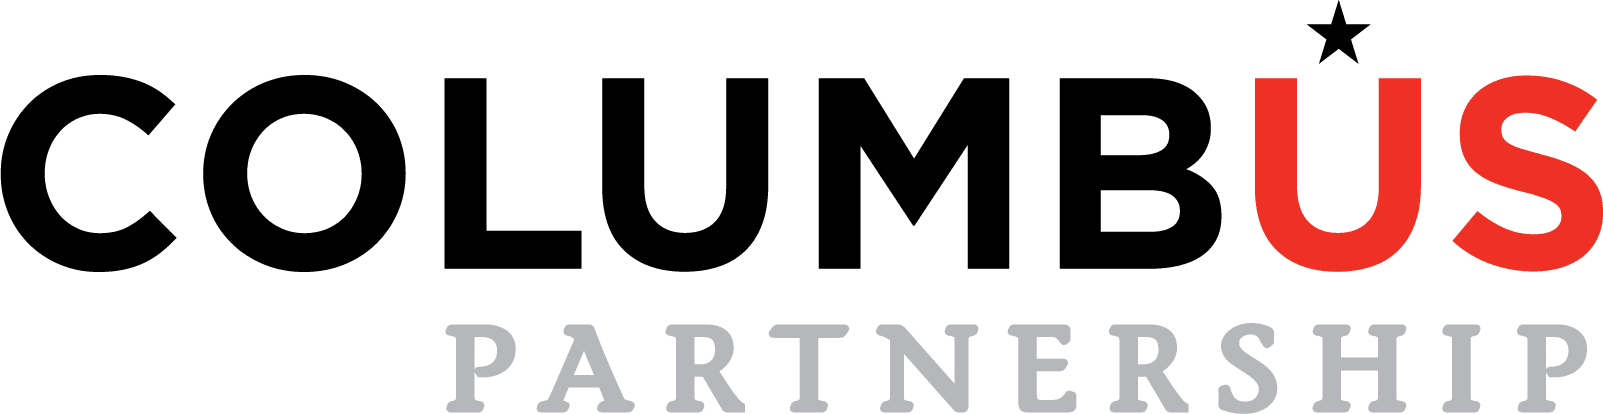 Columbus Partnership logo